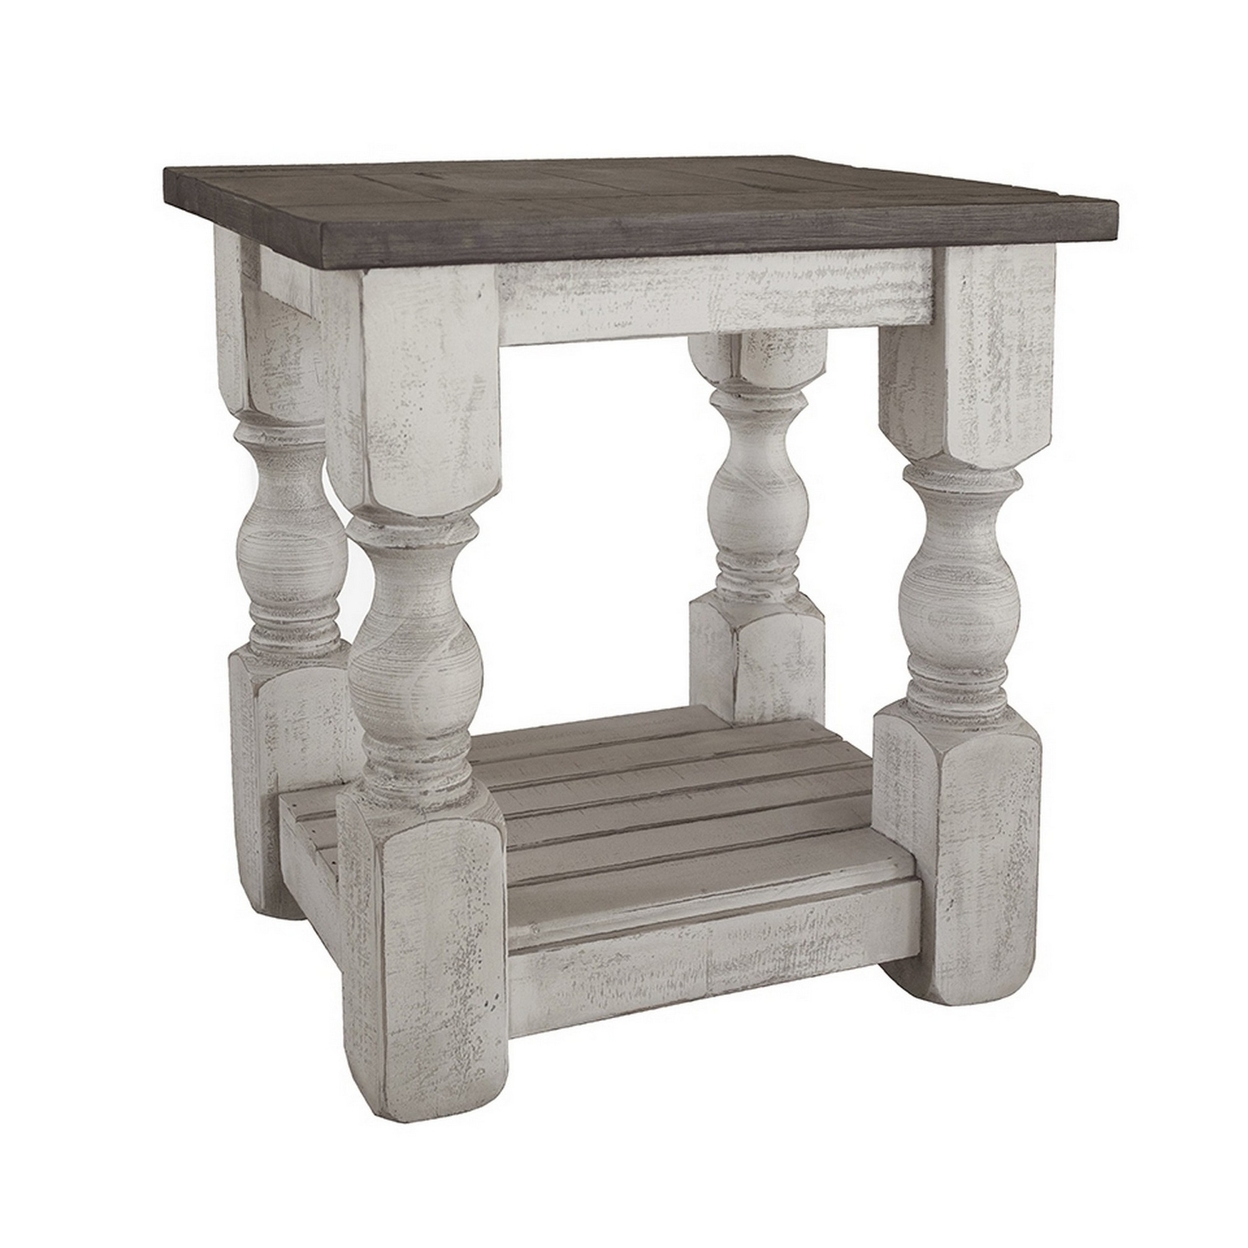 Suga 24 Inch Chairside Table, Baluster Posts, Pine Wood, Ivory And Gray- Saltoro Sherpi